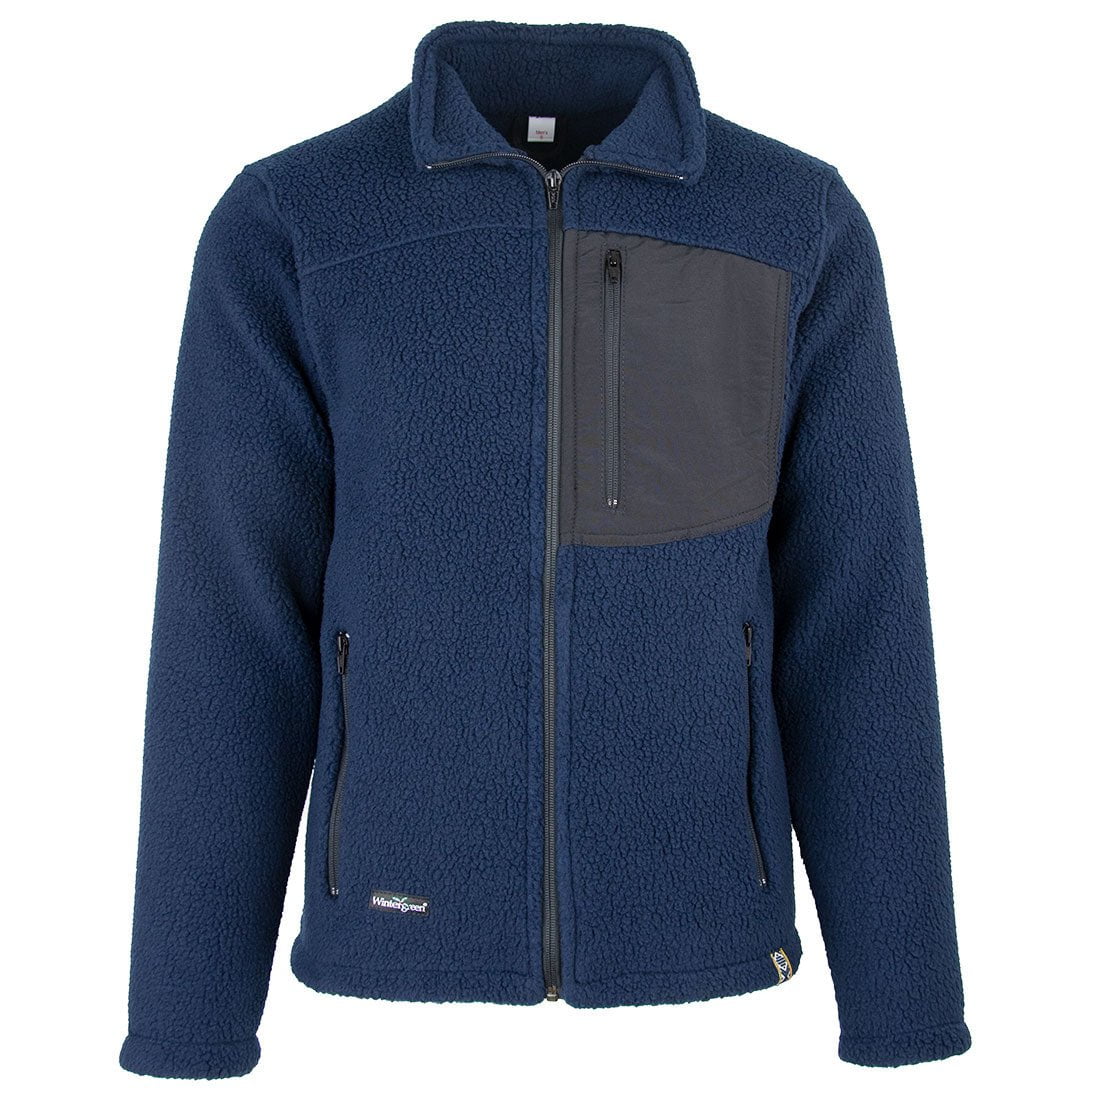 Men's Patterned Fleece Jacket - Navy